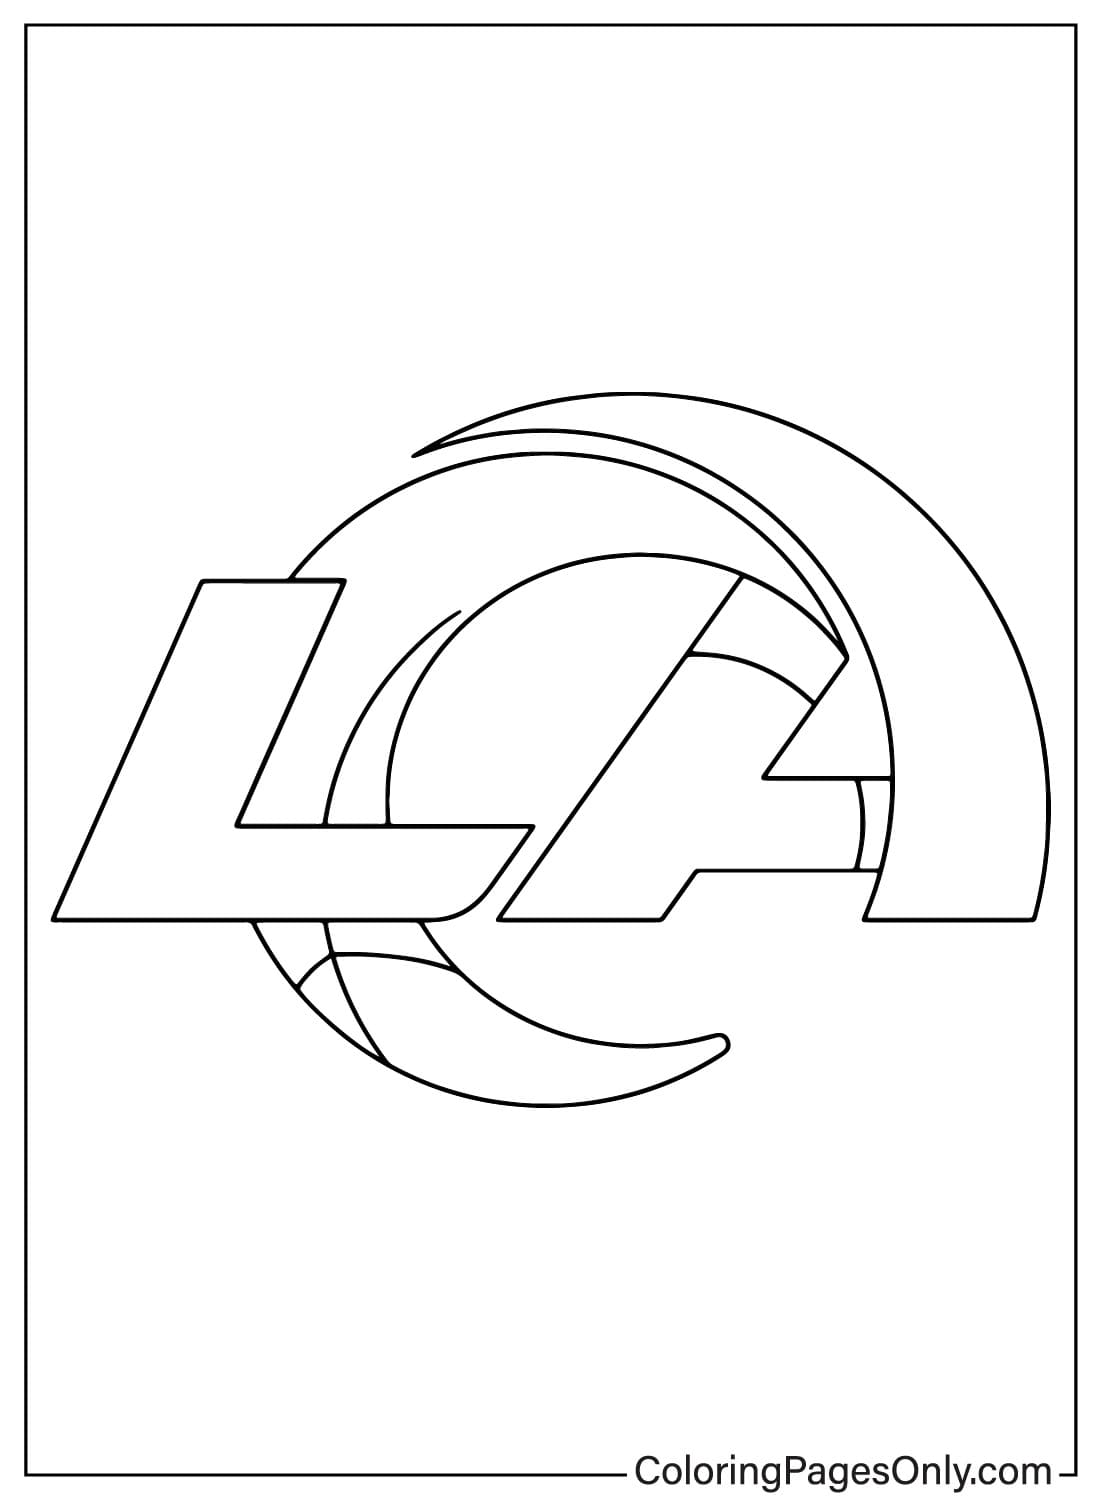 Coloriage du logo des Rams de Los Angeles de la NFL